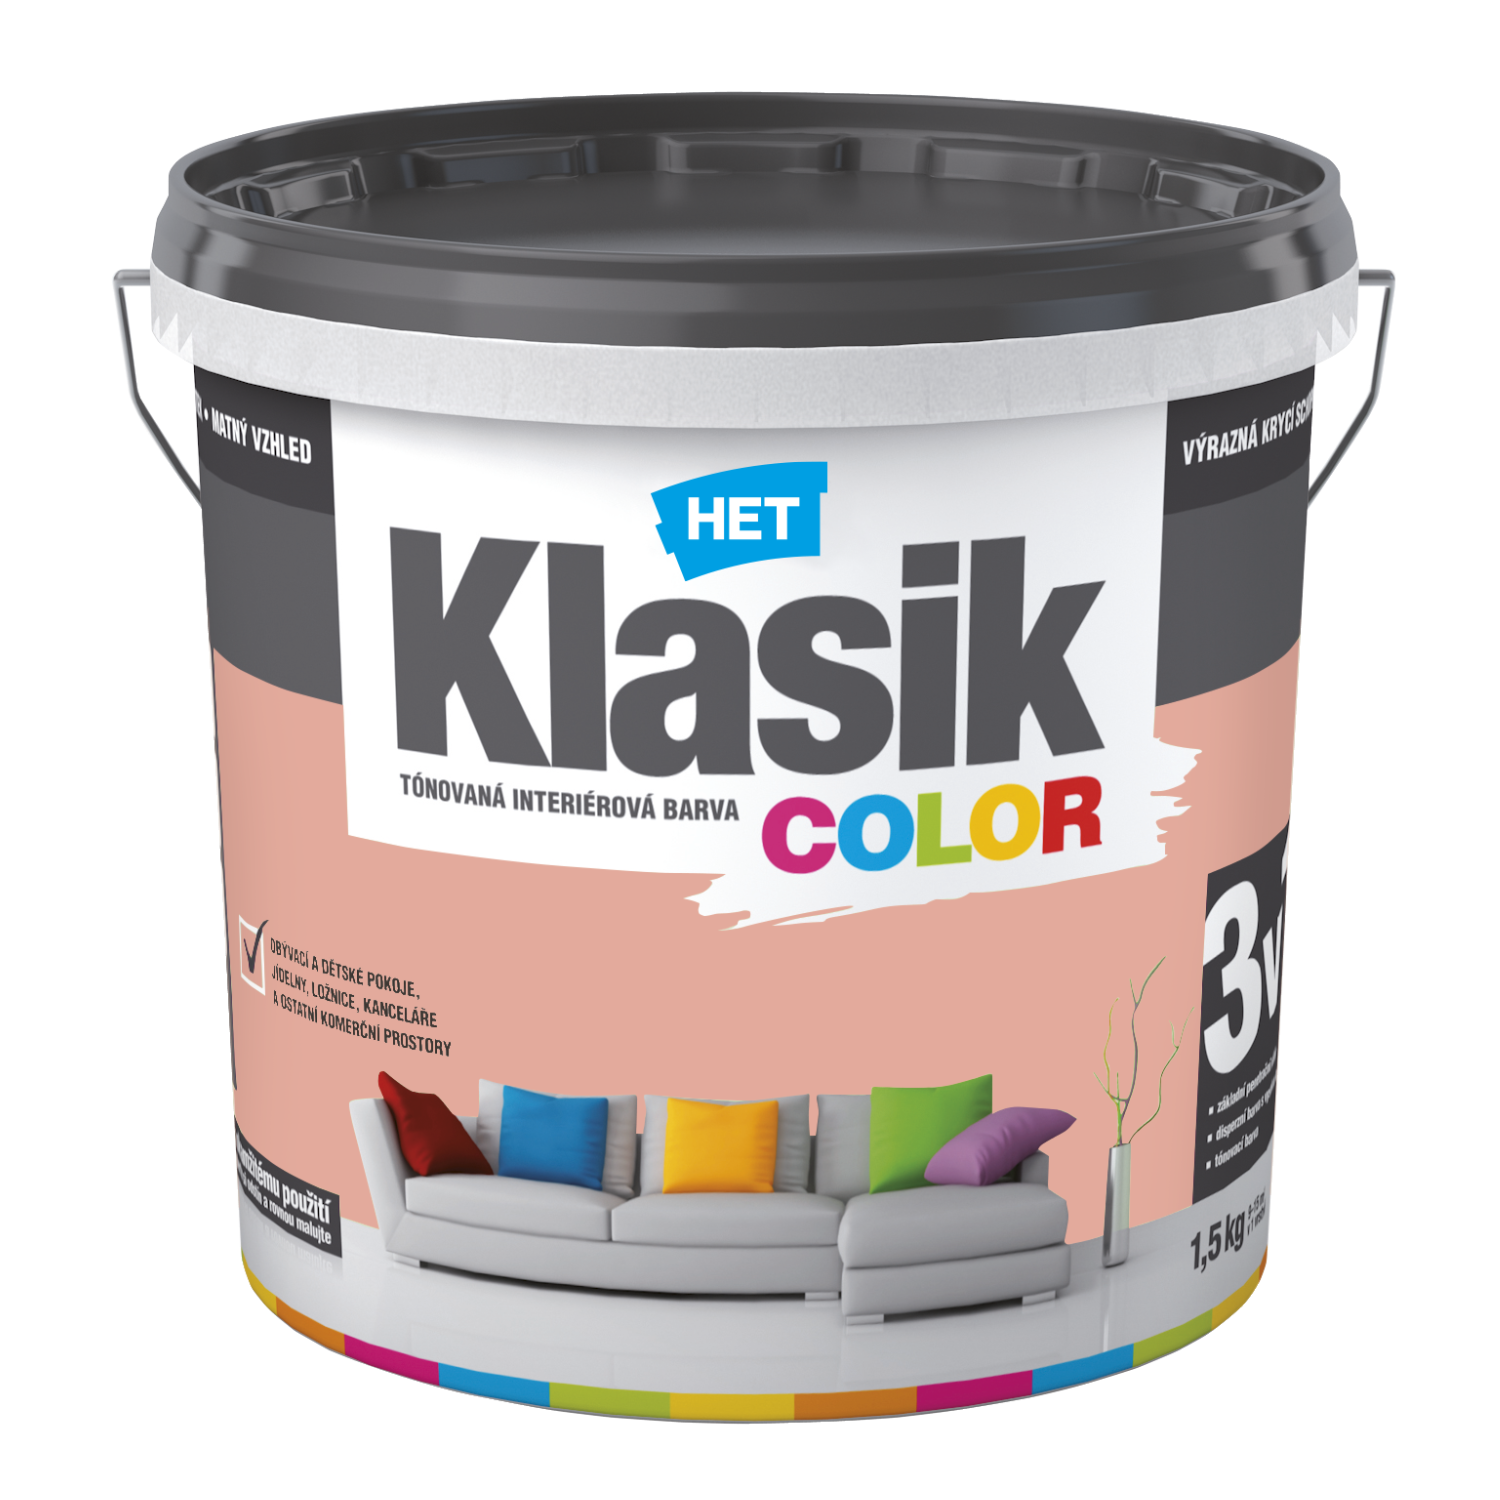 HET Klasik COLOR tónovaná interiérová akrylátová disperzná oteruvzdorná farba 1,5 kg, KC0897 - vínový